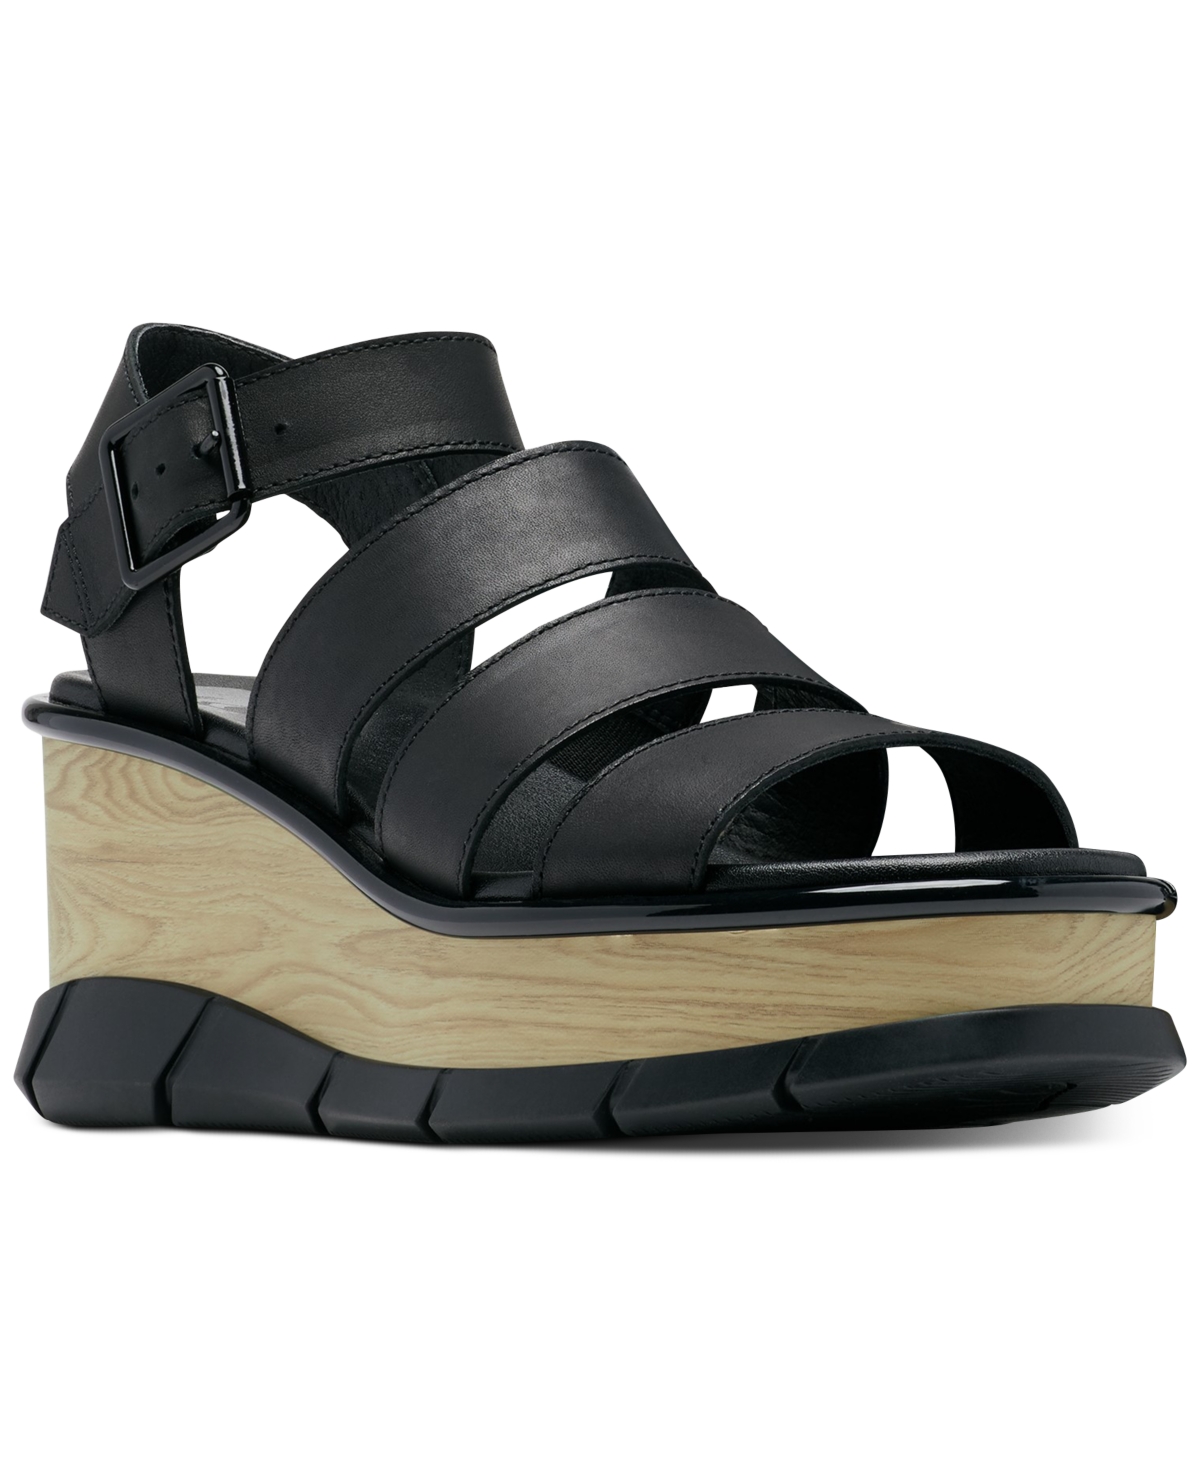 Size 6 SOREL Joanie III Ankle Strap Wedge Platform Sandal in Black Black at Nordstrom, 